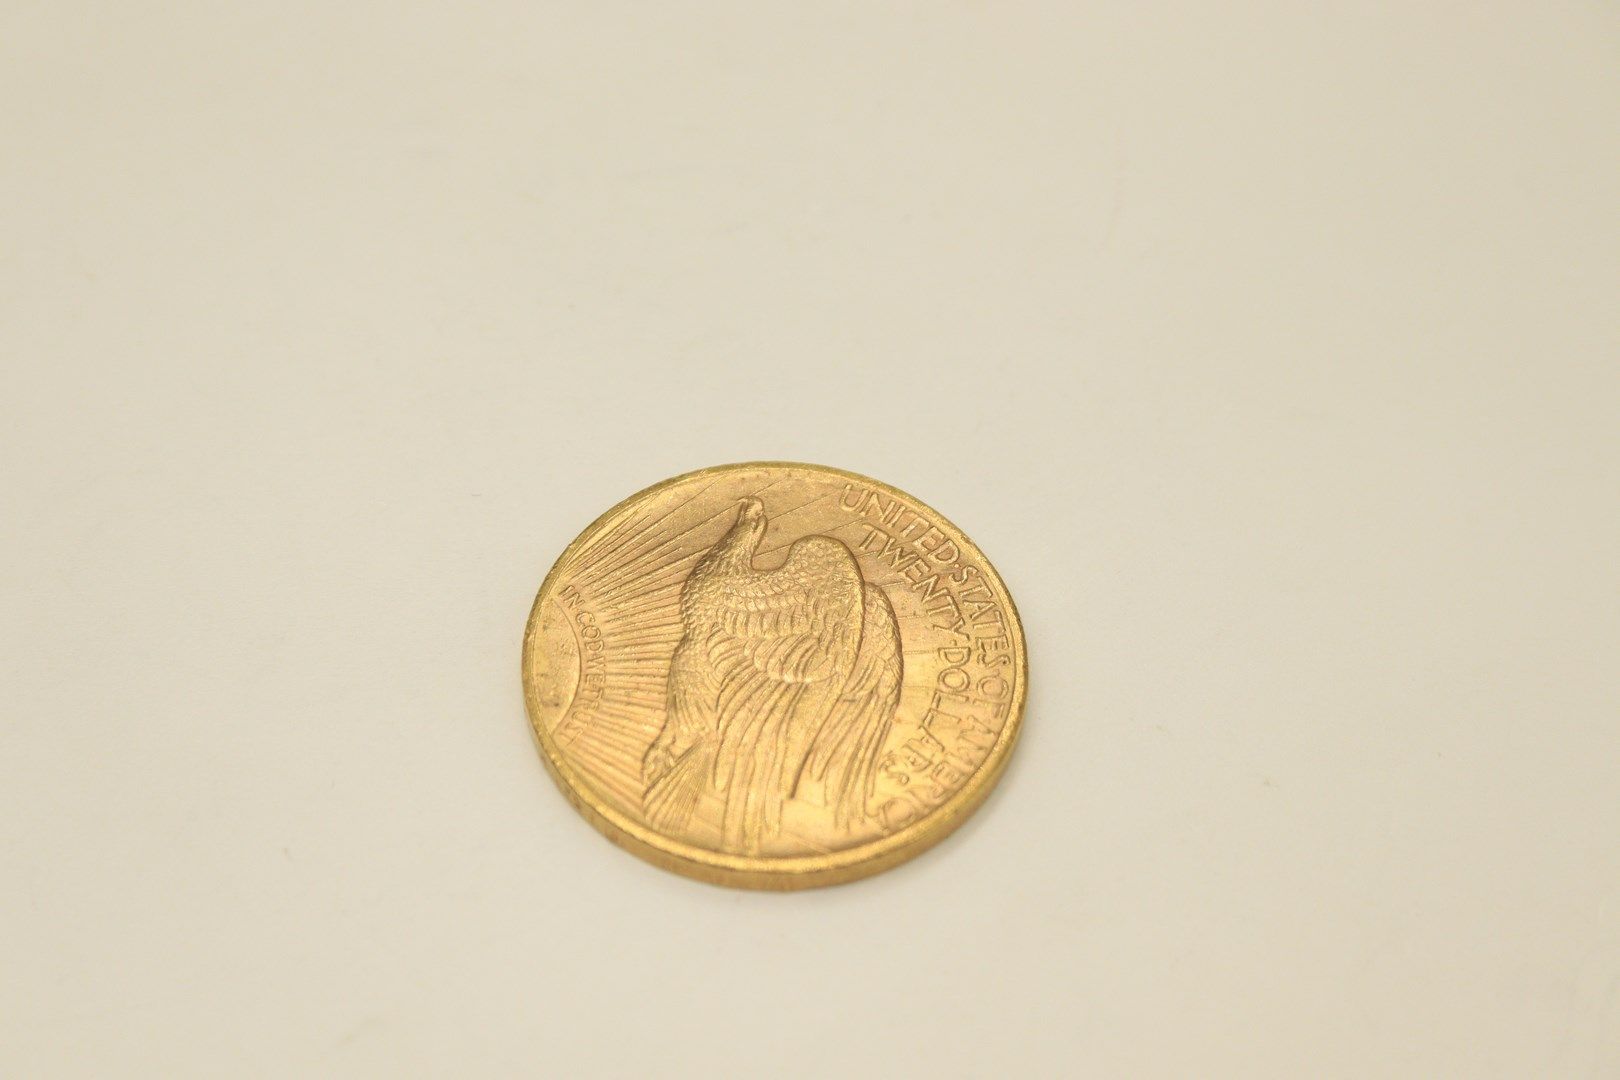 Null Moneta d'oro da 20 dollari "Double Eagle" (1923).
Peso: 33,30 g.